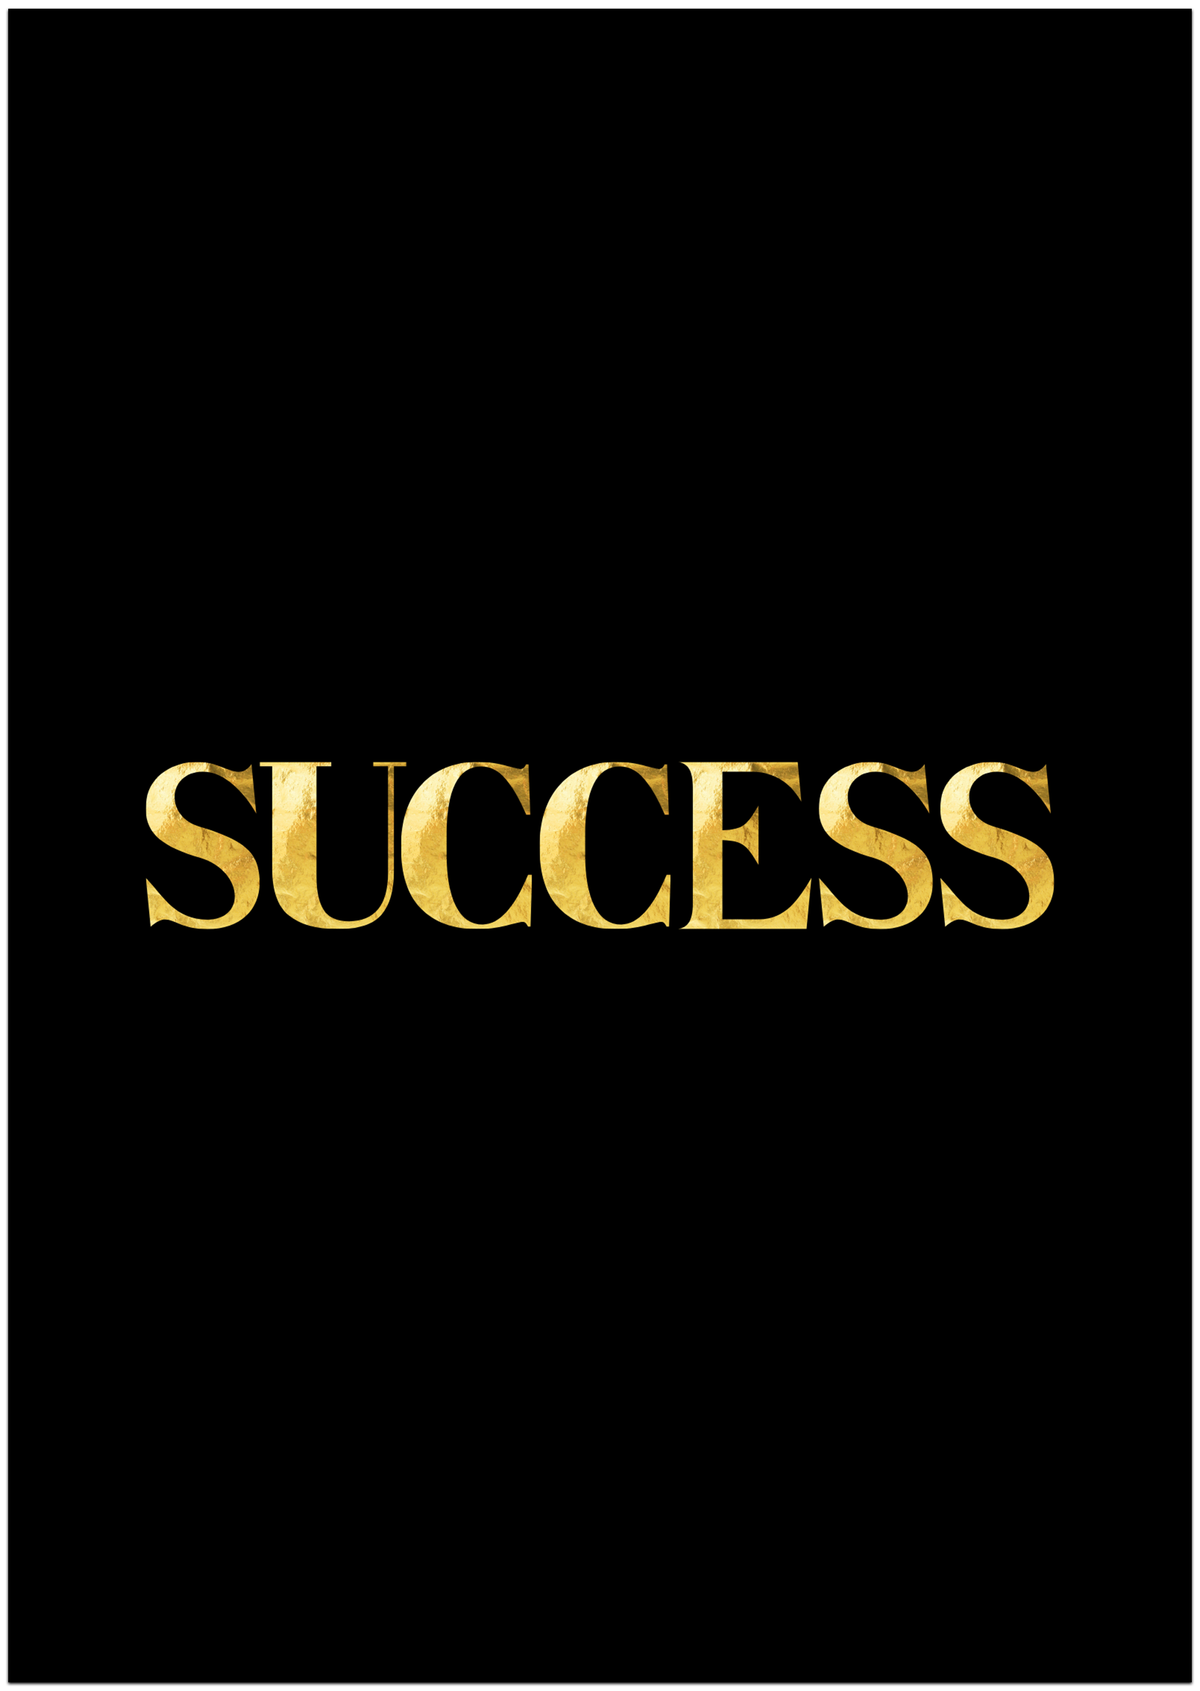 Success poster